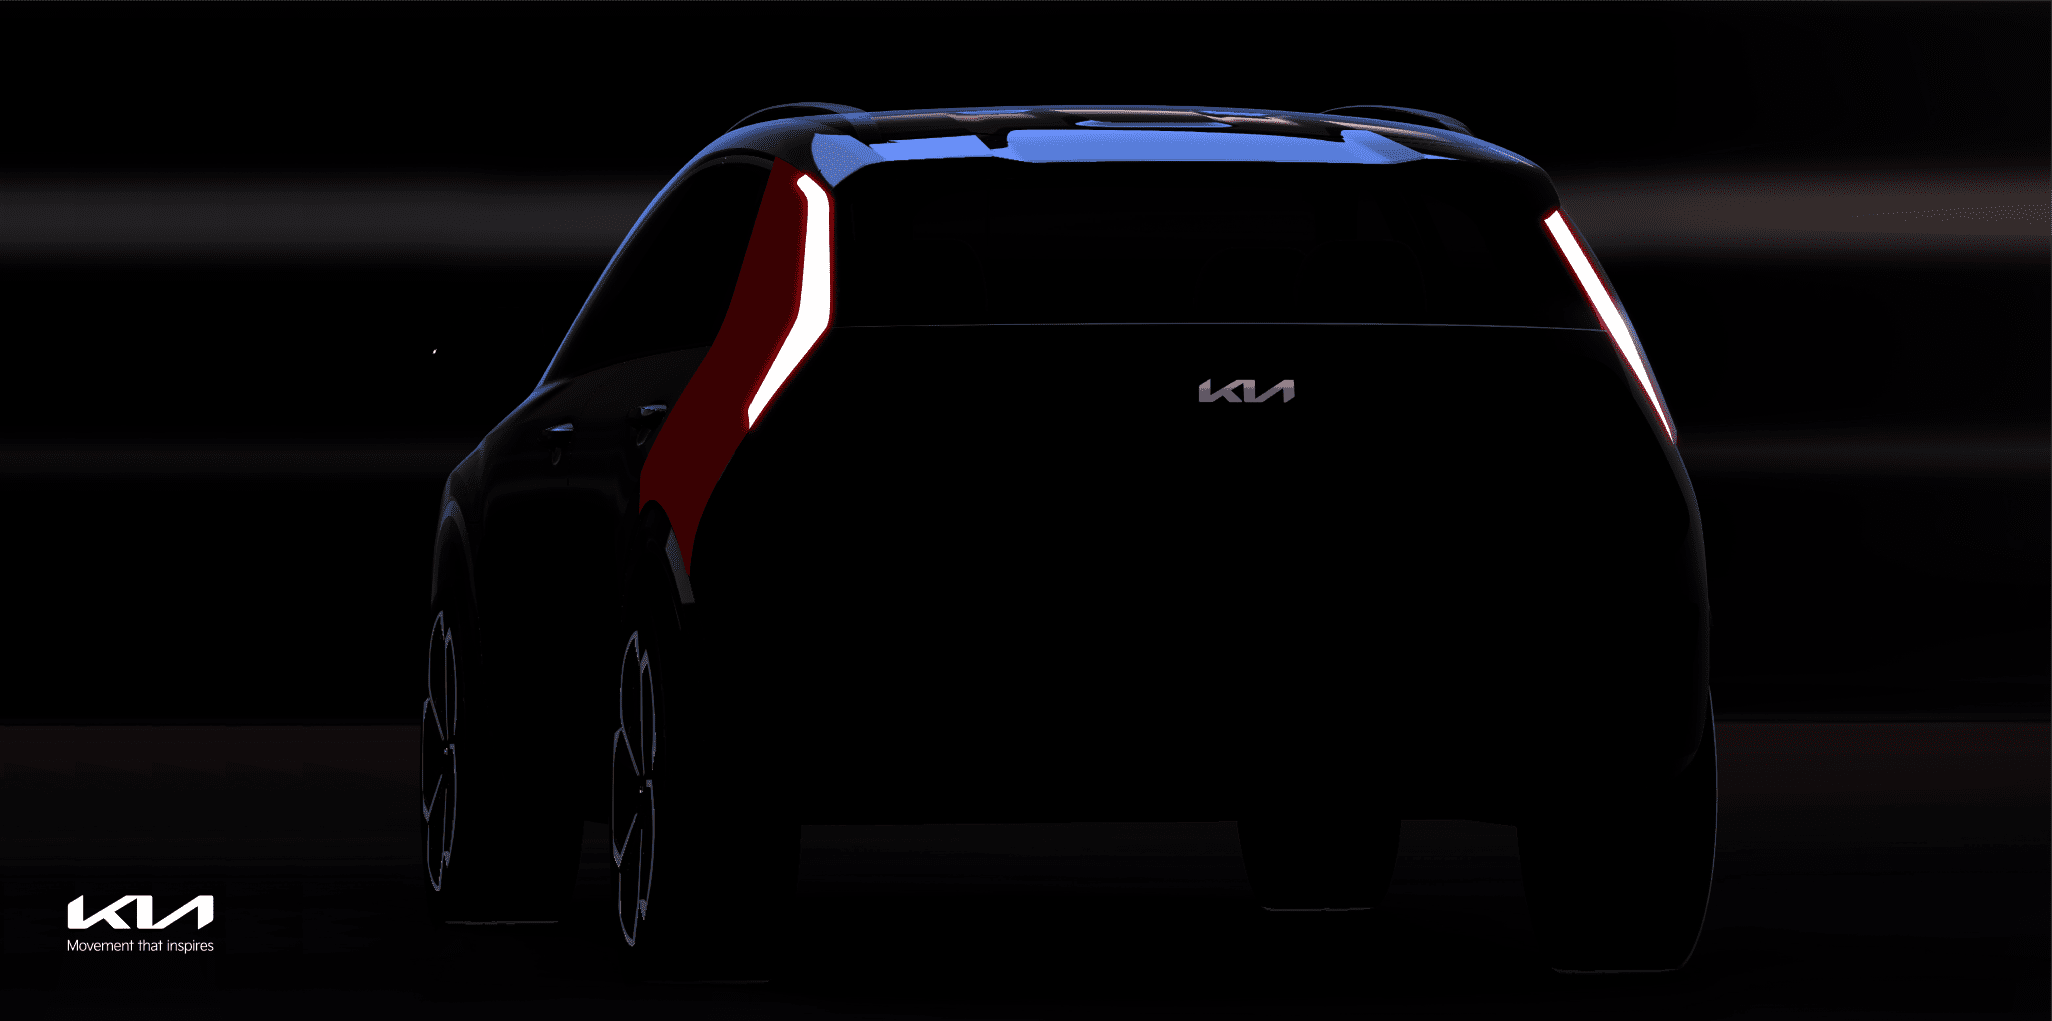 Rear view of the 2022 Kia Niro concept